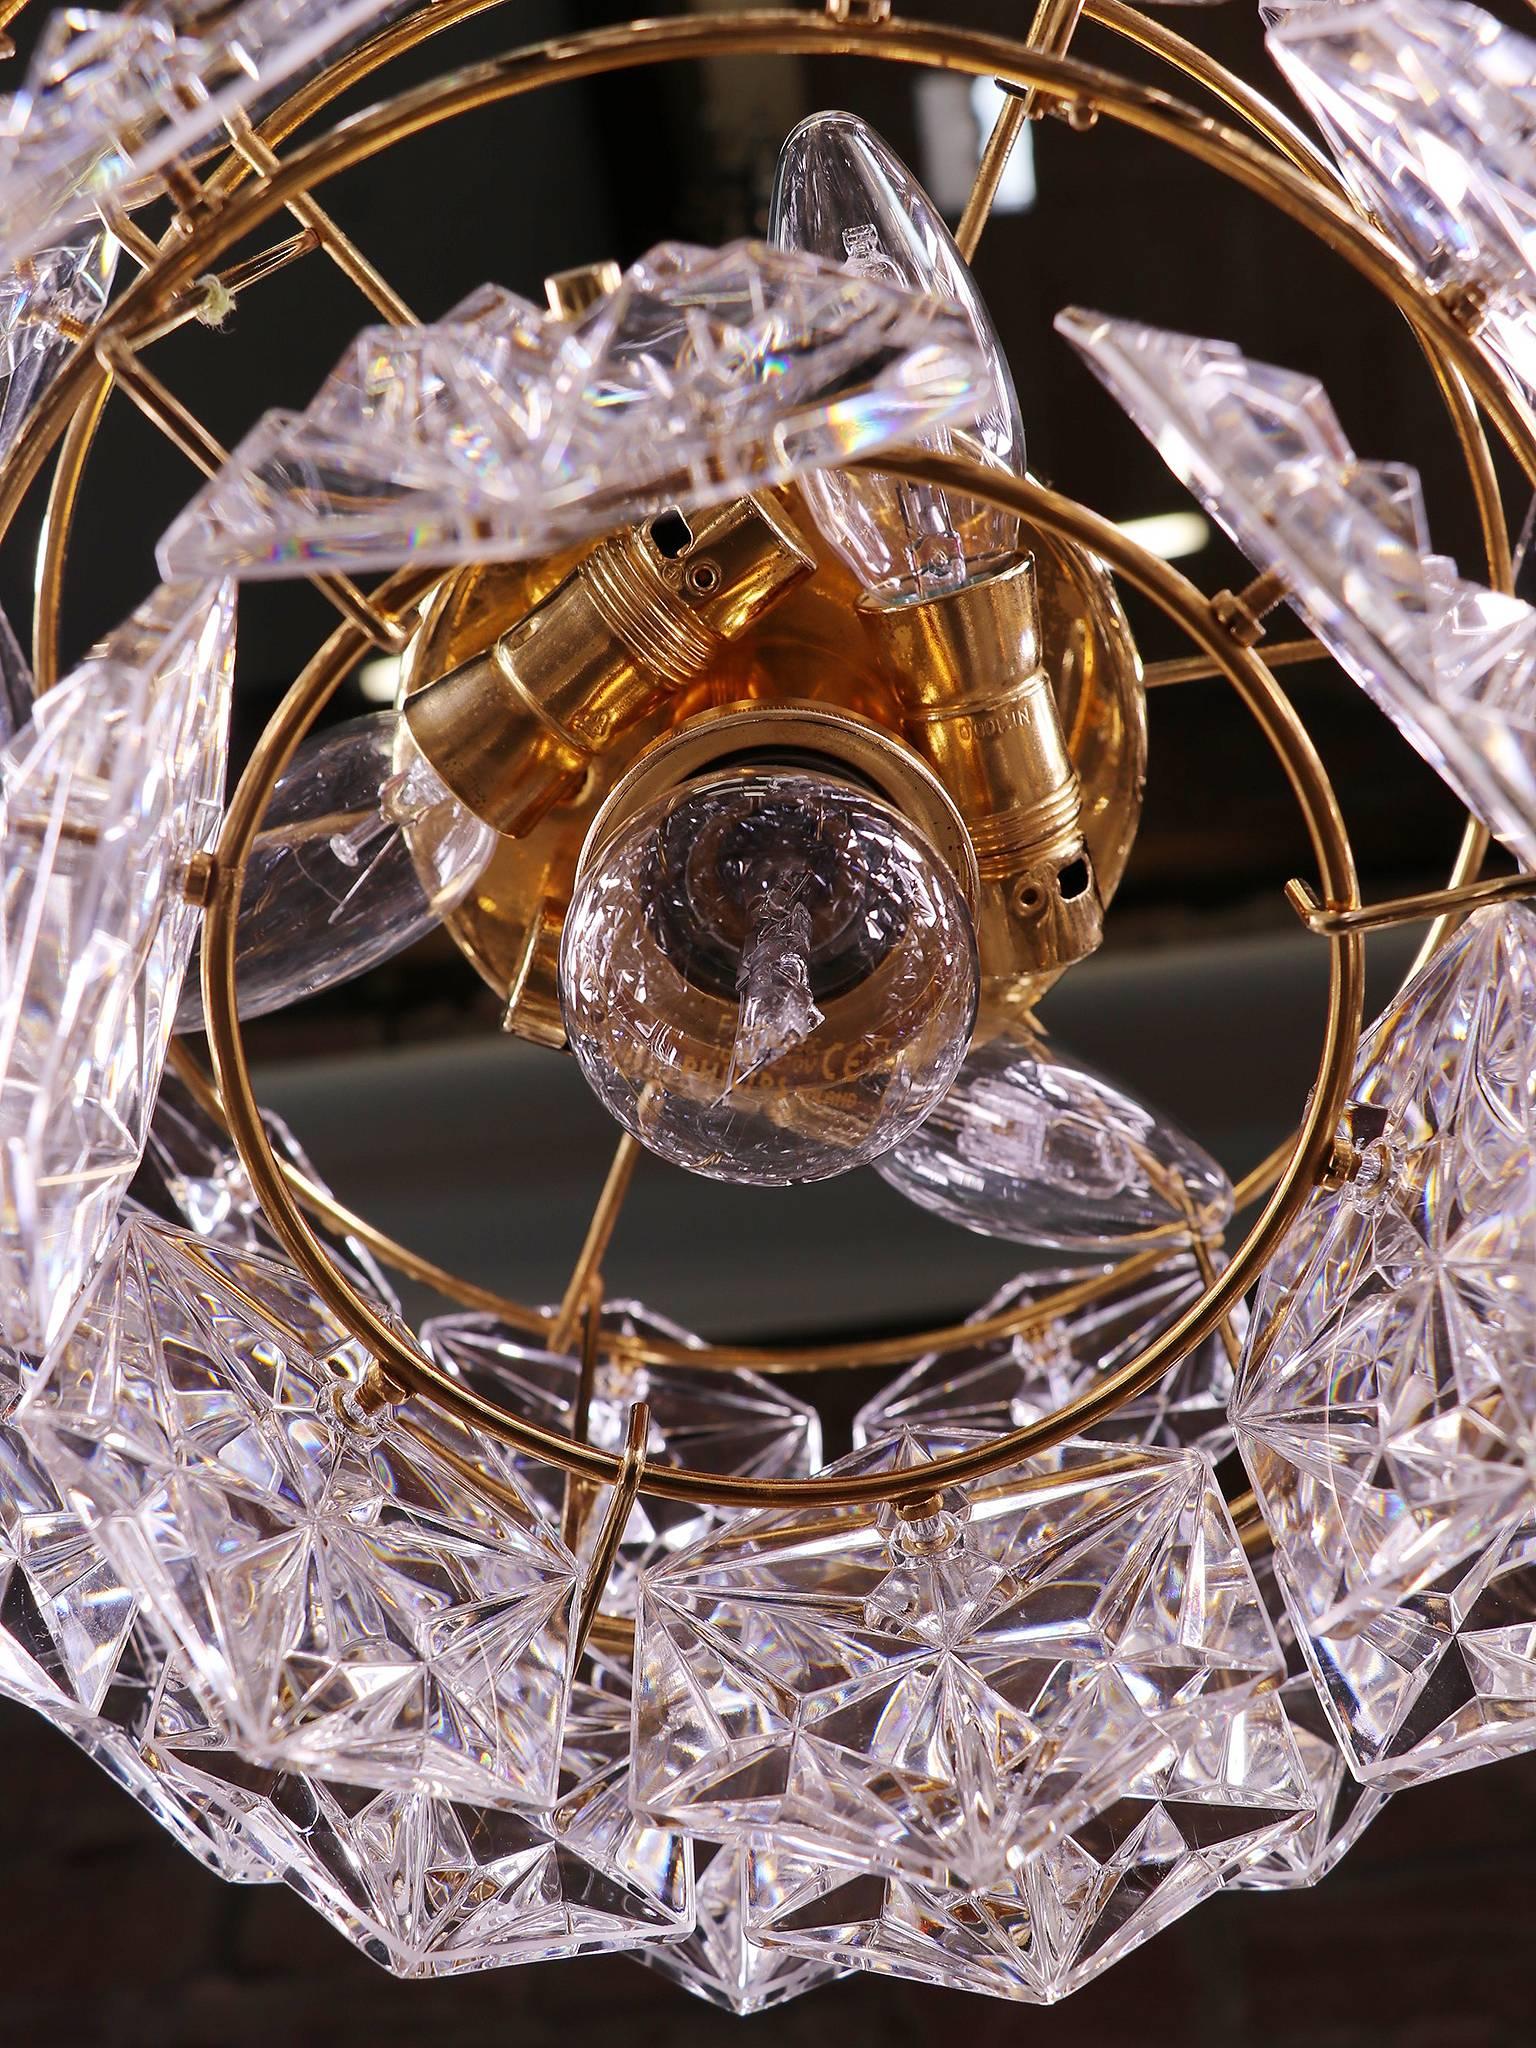 Gold-Plated Crystal Chandelier by Kinkeldey, Germany (Vergoldung)